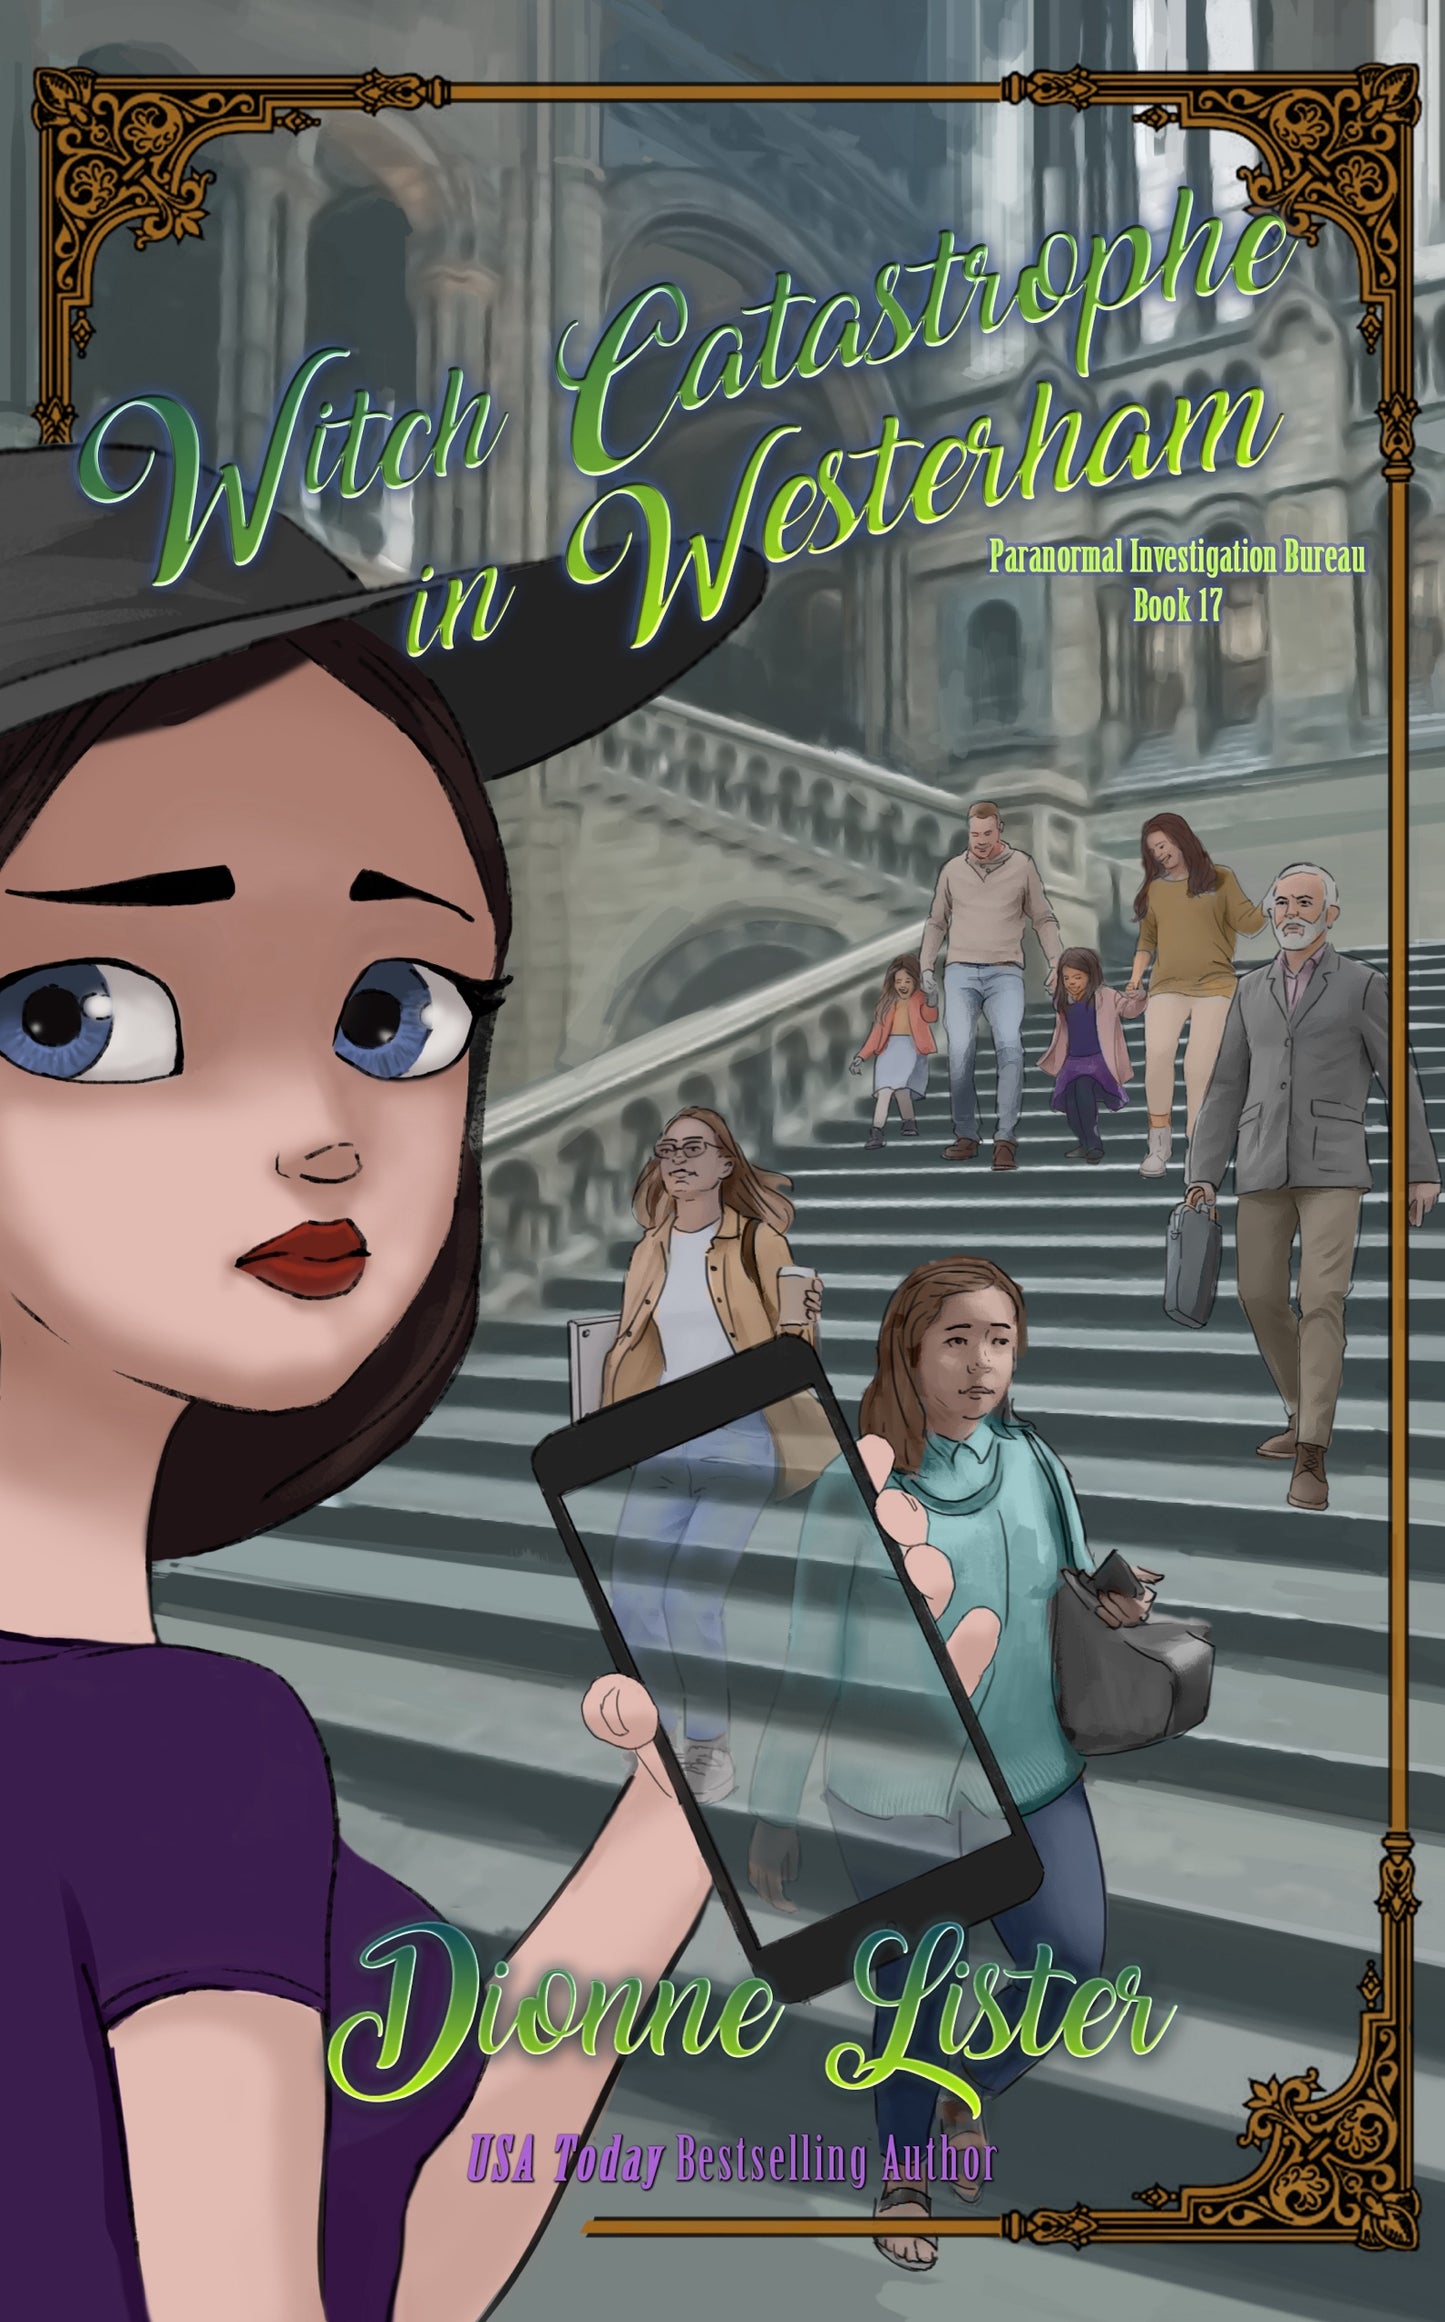 Witch Catastrophe in Westerham—Paranormal Investigation Bureau Book 17